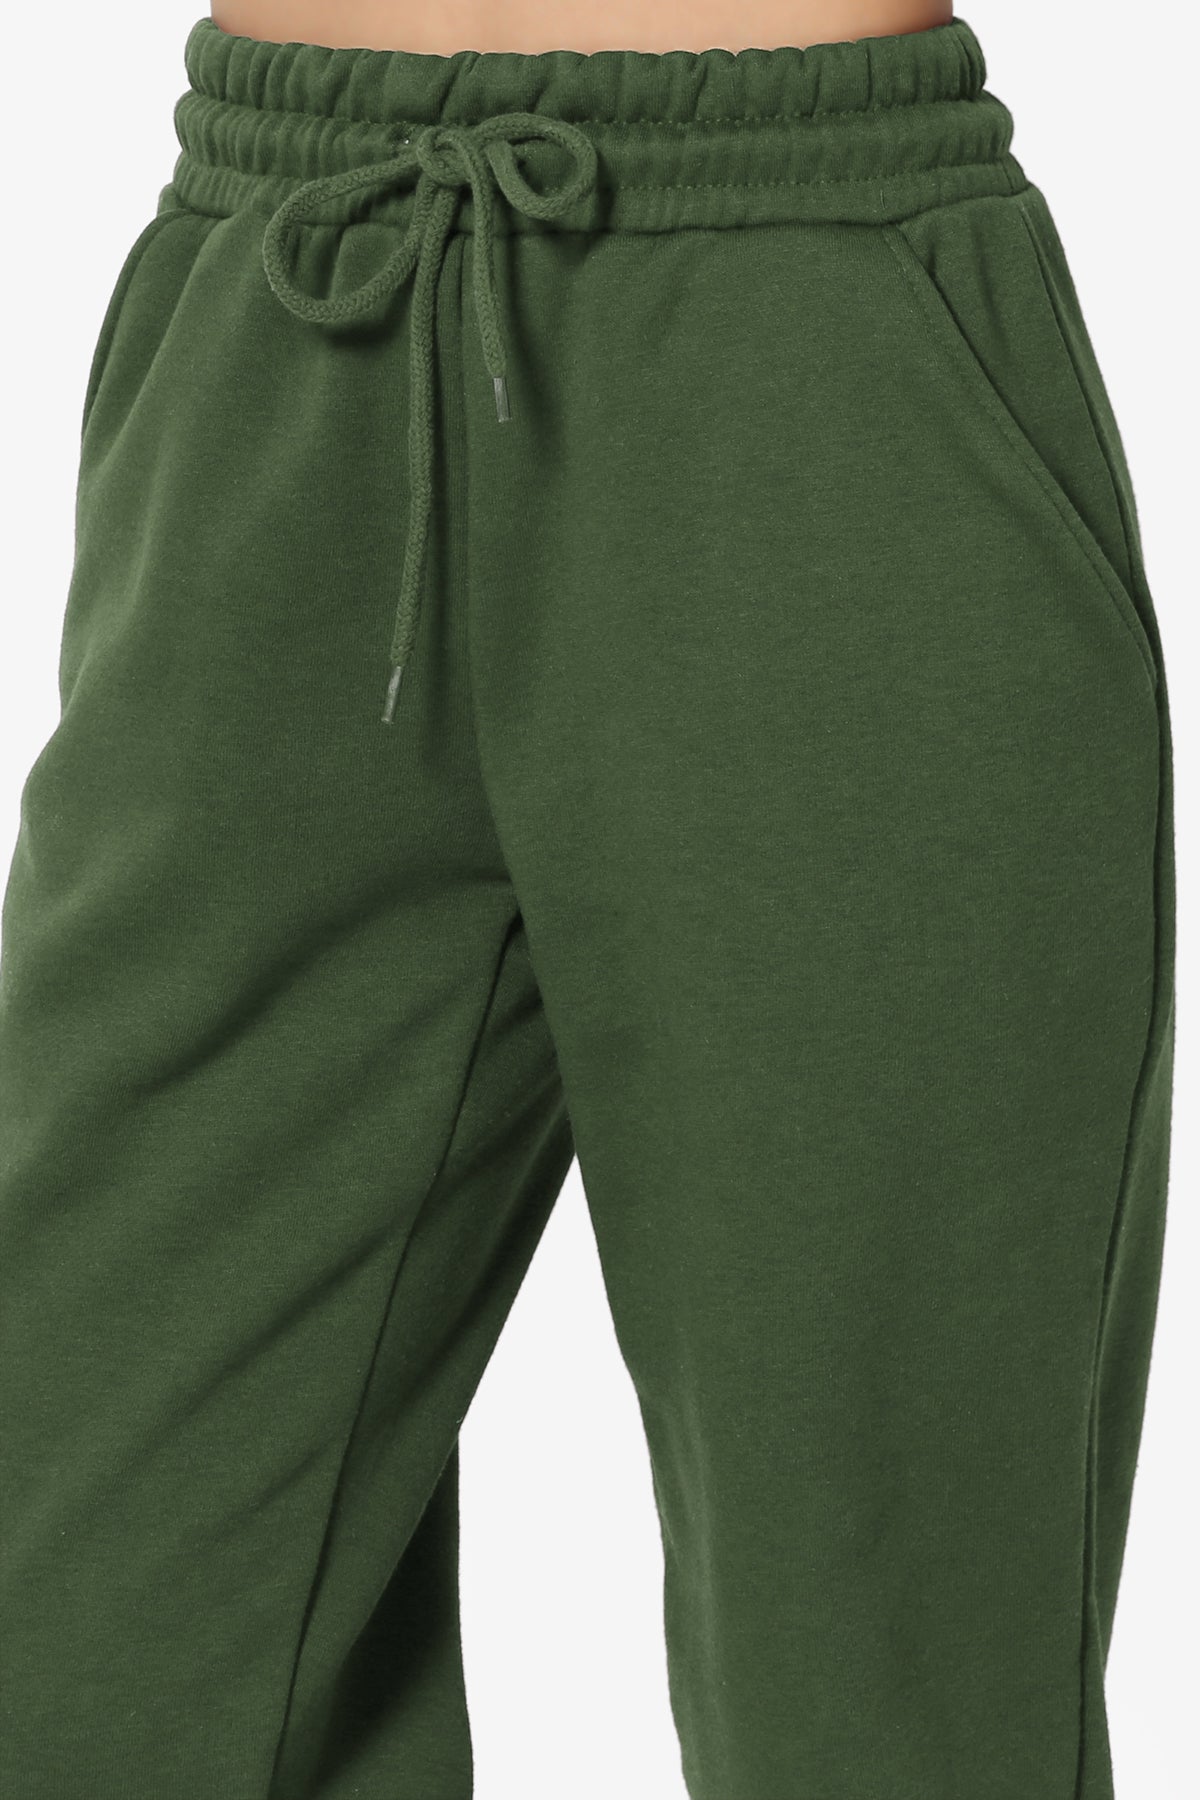  Cotton Fleece Lined Sweatpants Women Straight Leg Casual  Lounge Sweat Pants For Women Green Jade Small